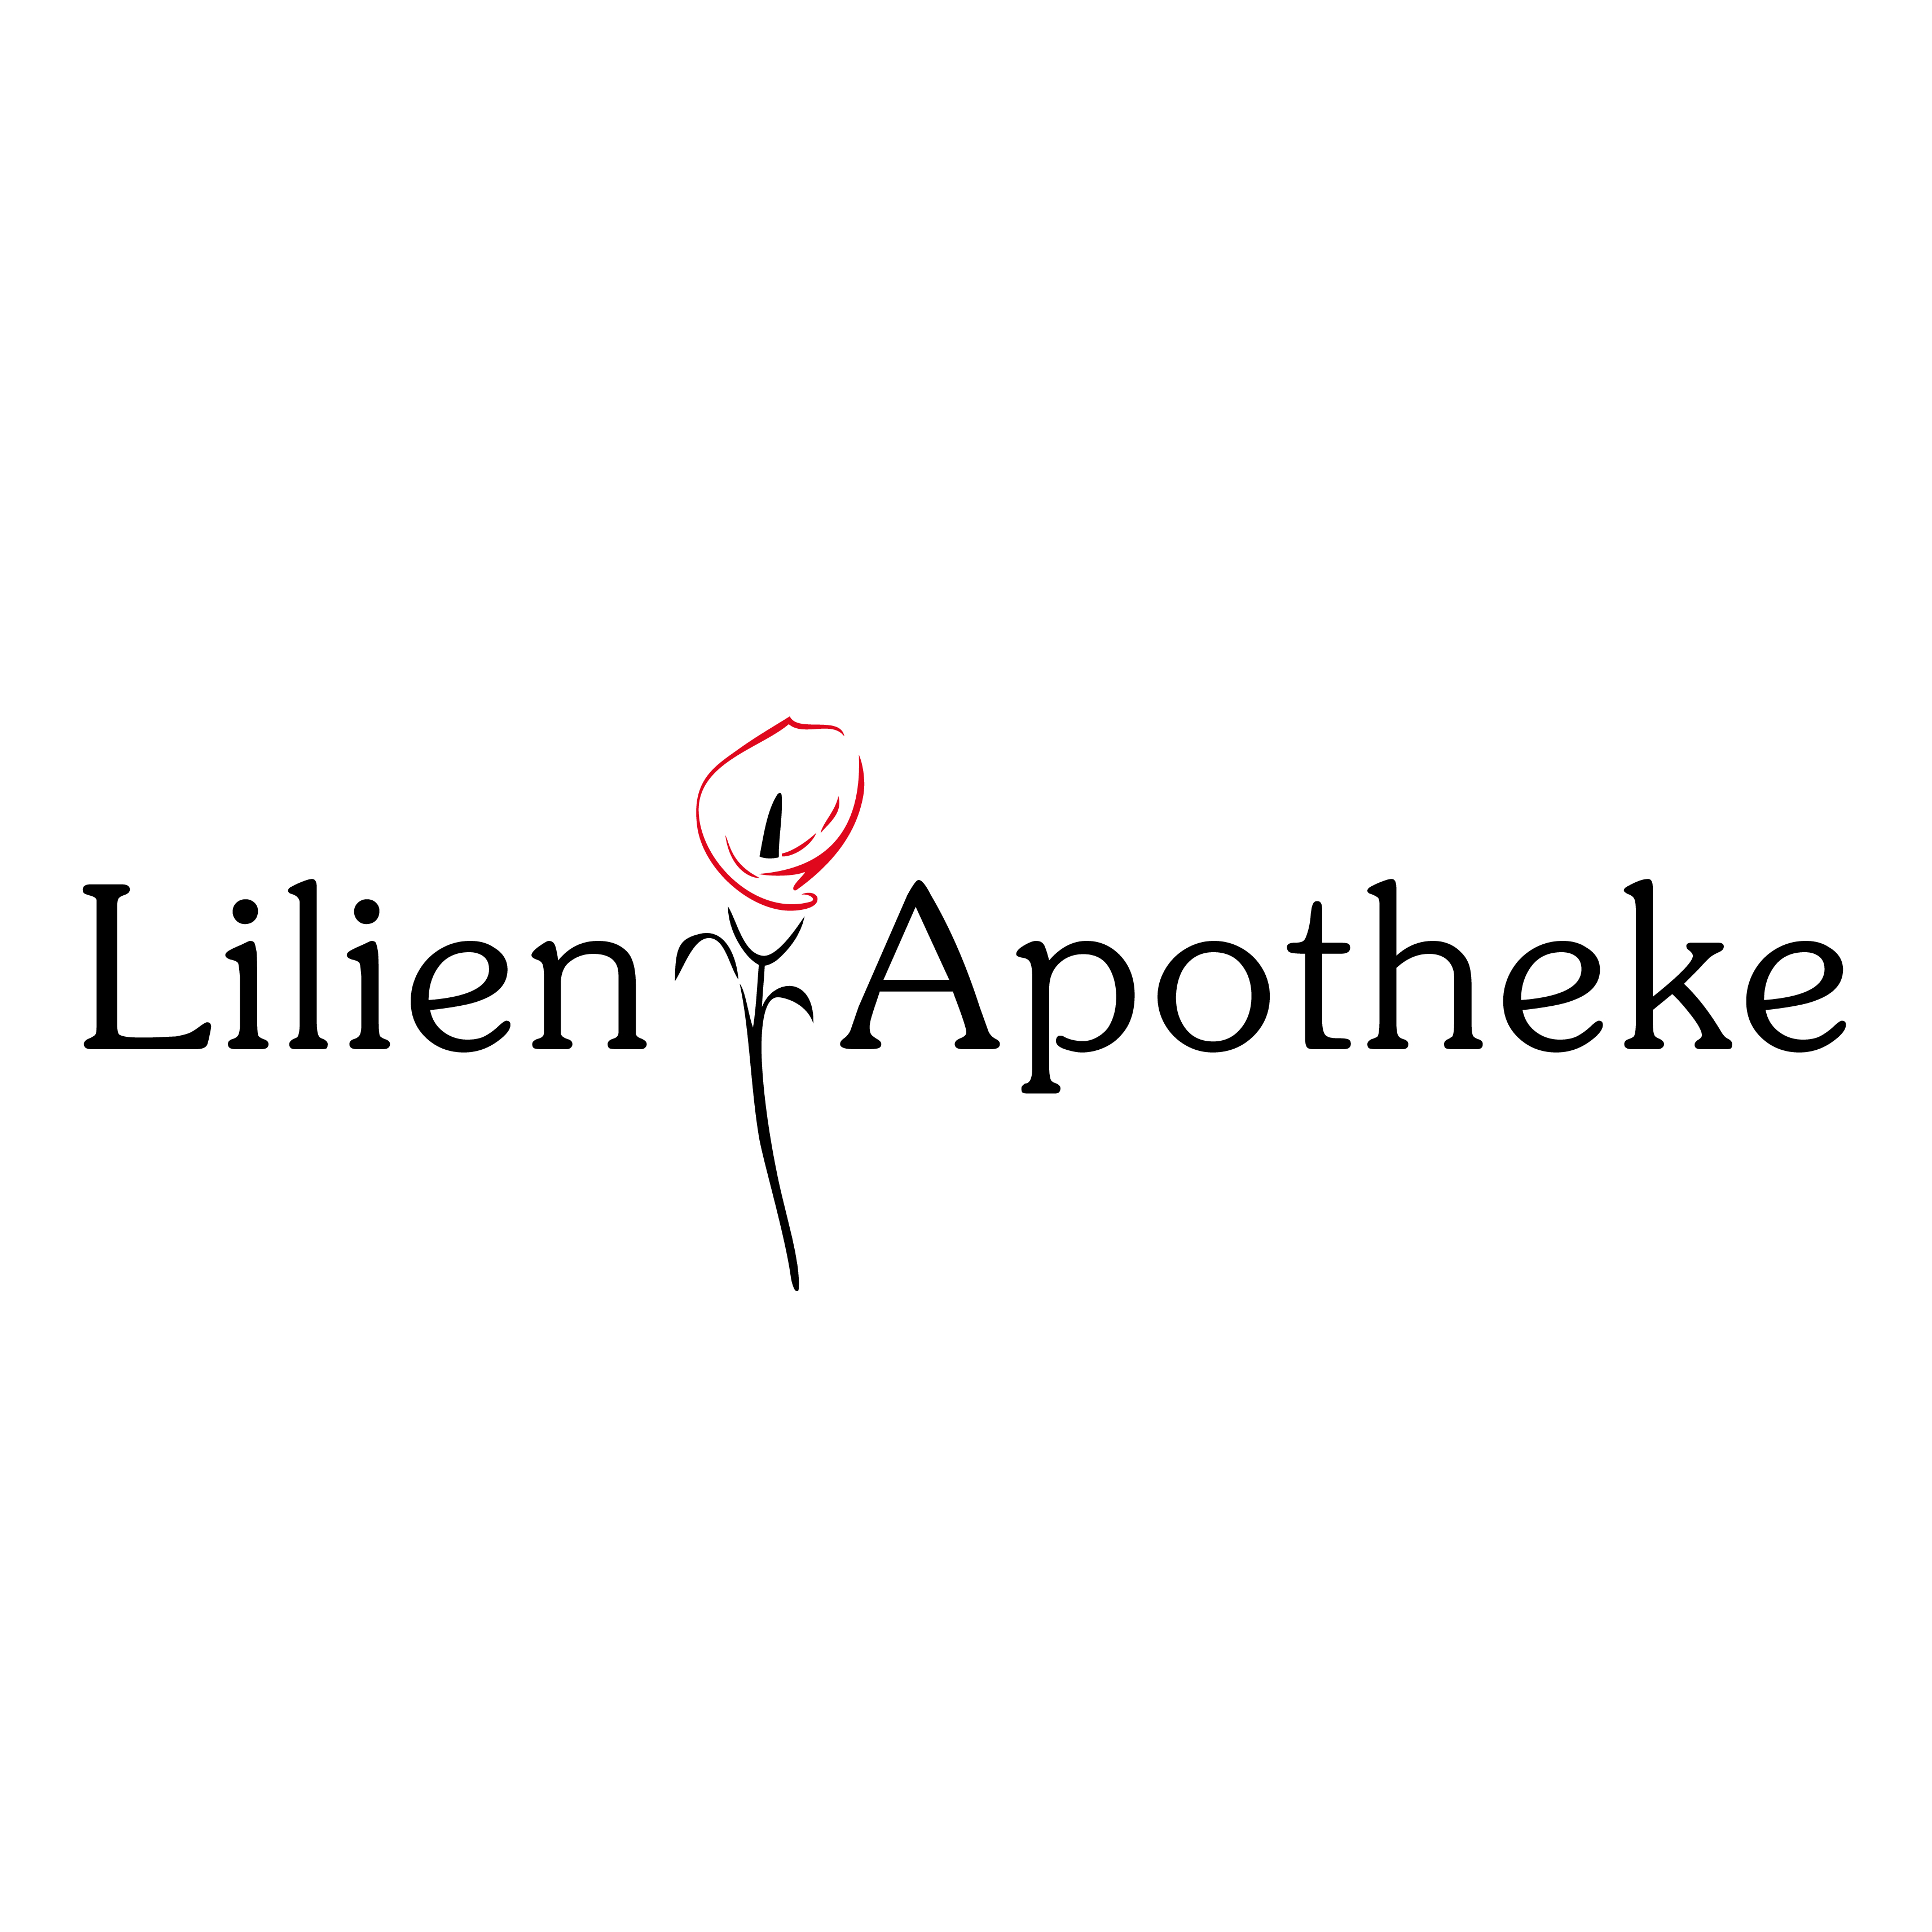 Lilien-Apotheke in Gifhorn - Logo